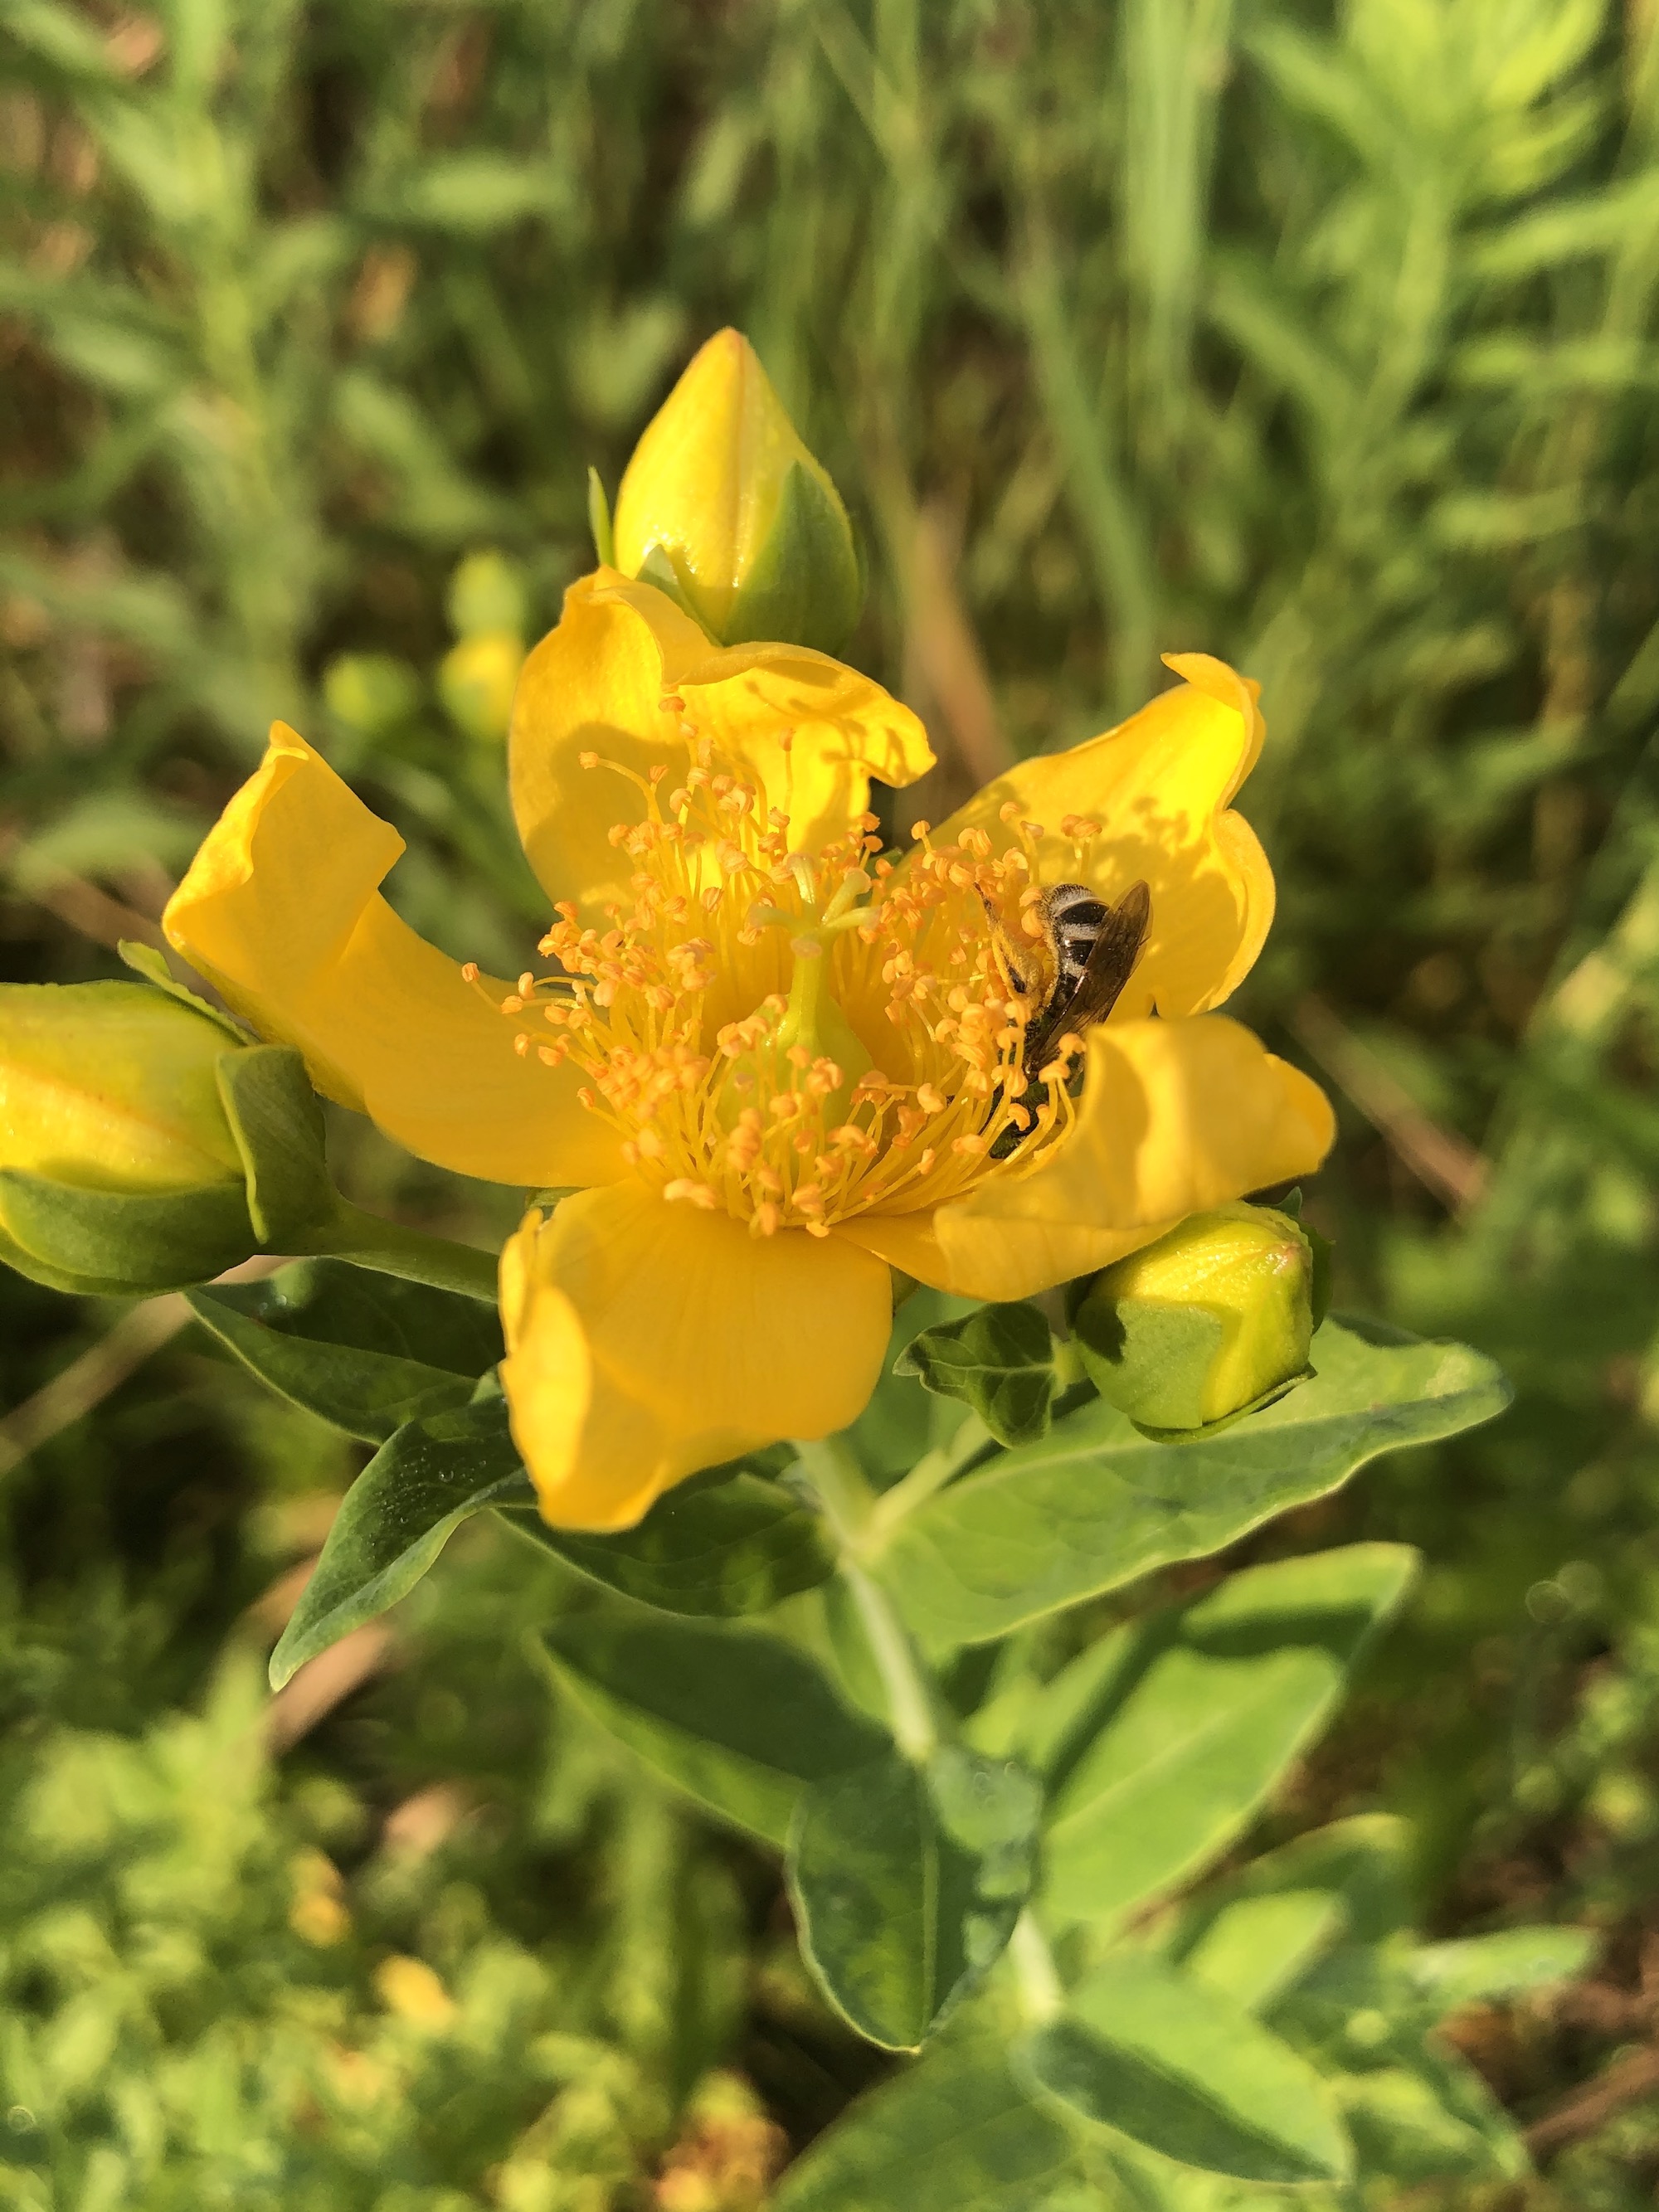 Agapostemon Sweat bee on Great St. John's wort on bank of Marion Dunn Pond on July 9, 2020